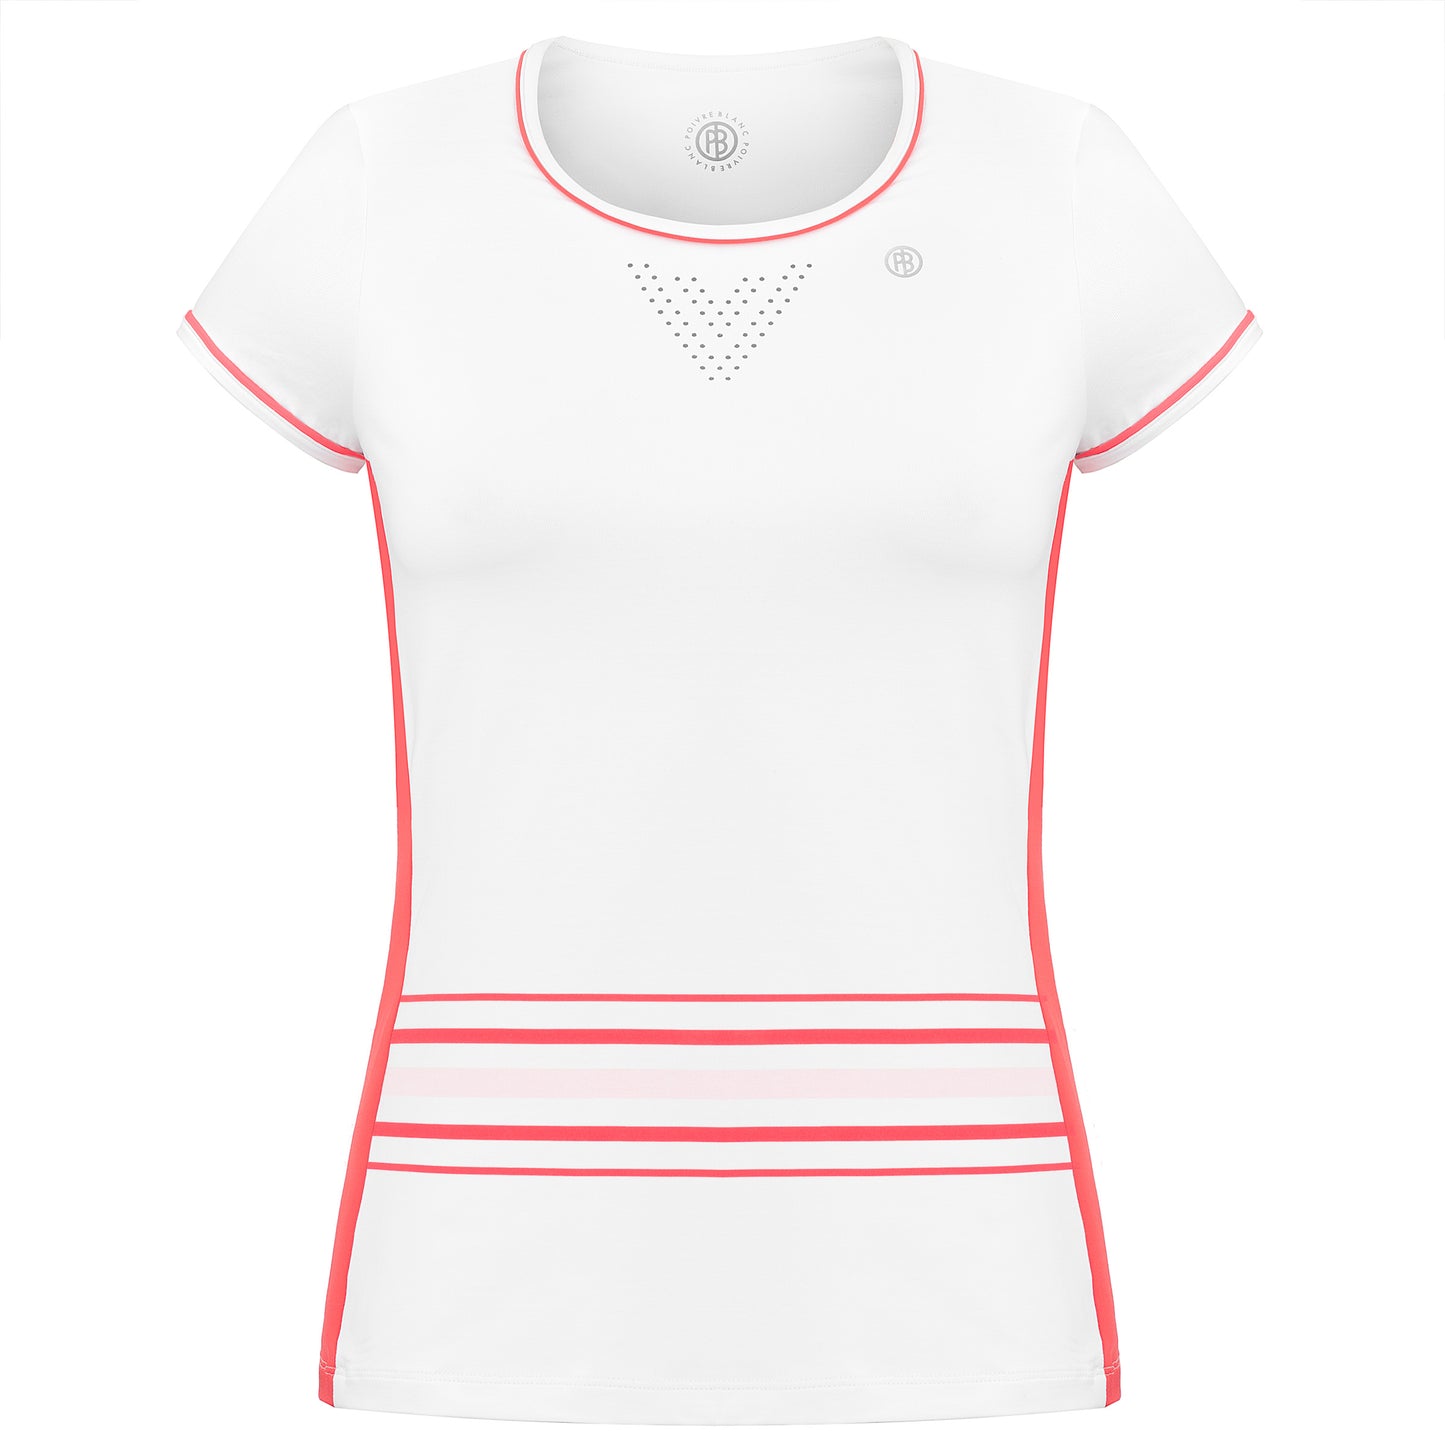 Women's Tennis / Padel Short Sleeved T-Shirt in Horizon White Spritz Red 4803